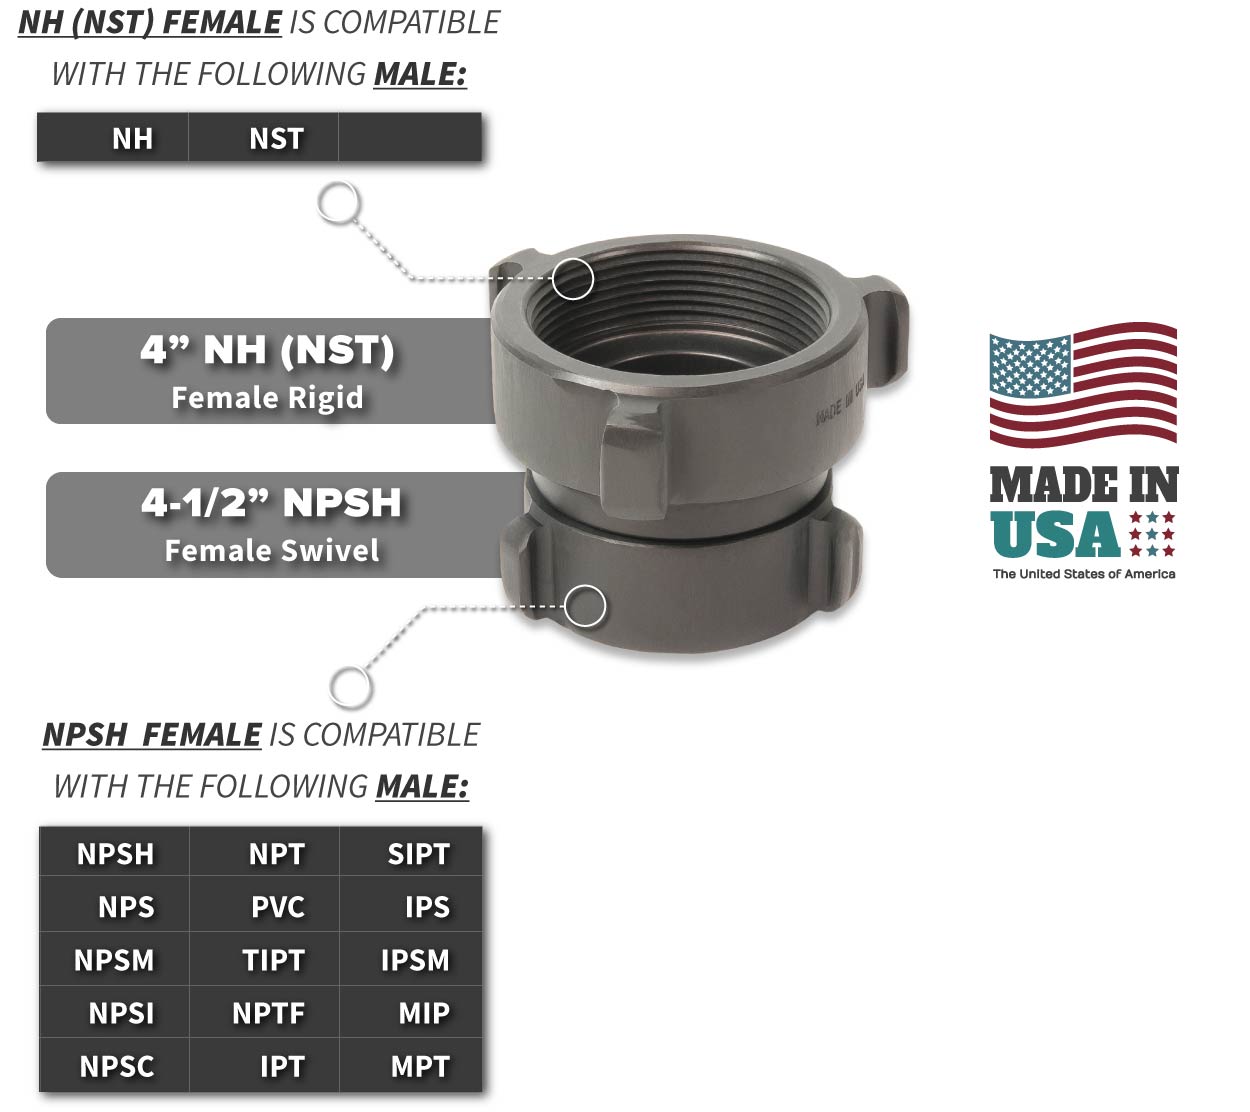 4.5 NPSH Female Swivel x 4 NH (NST) Female Rigid Adapter